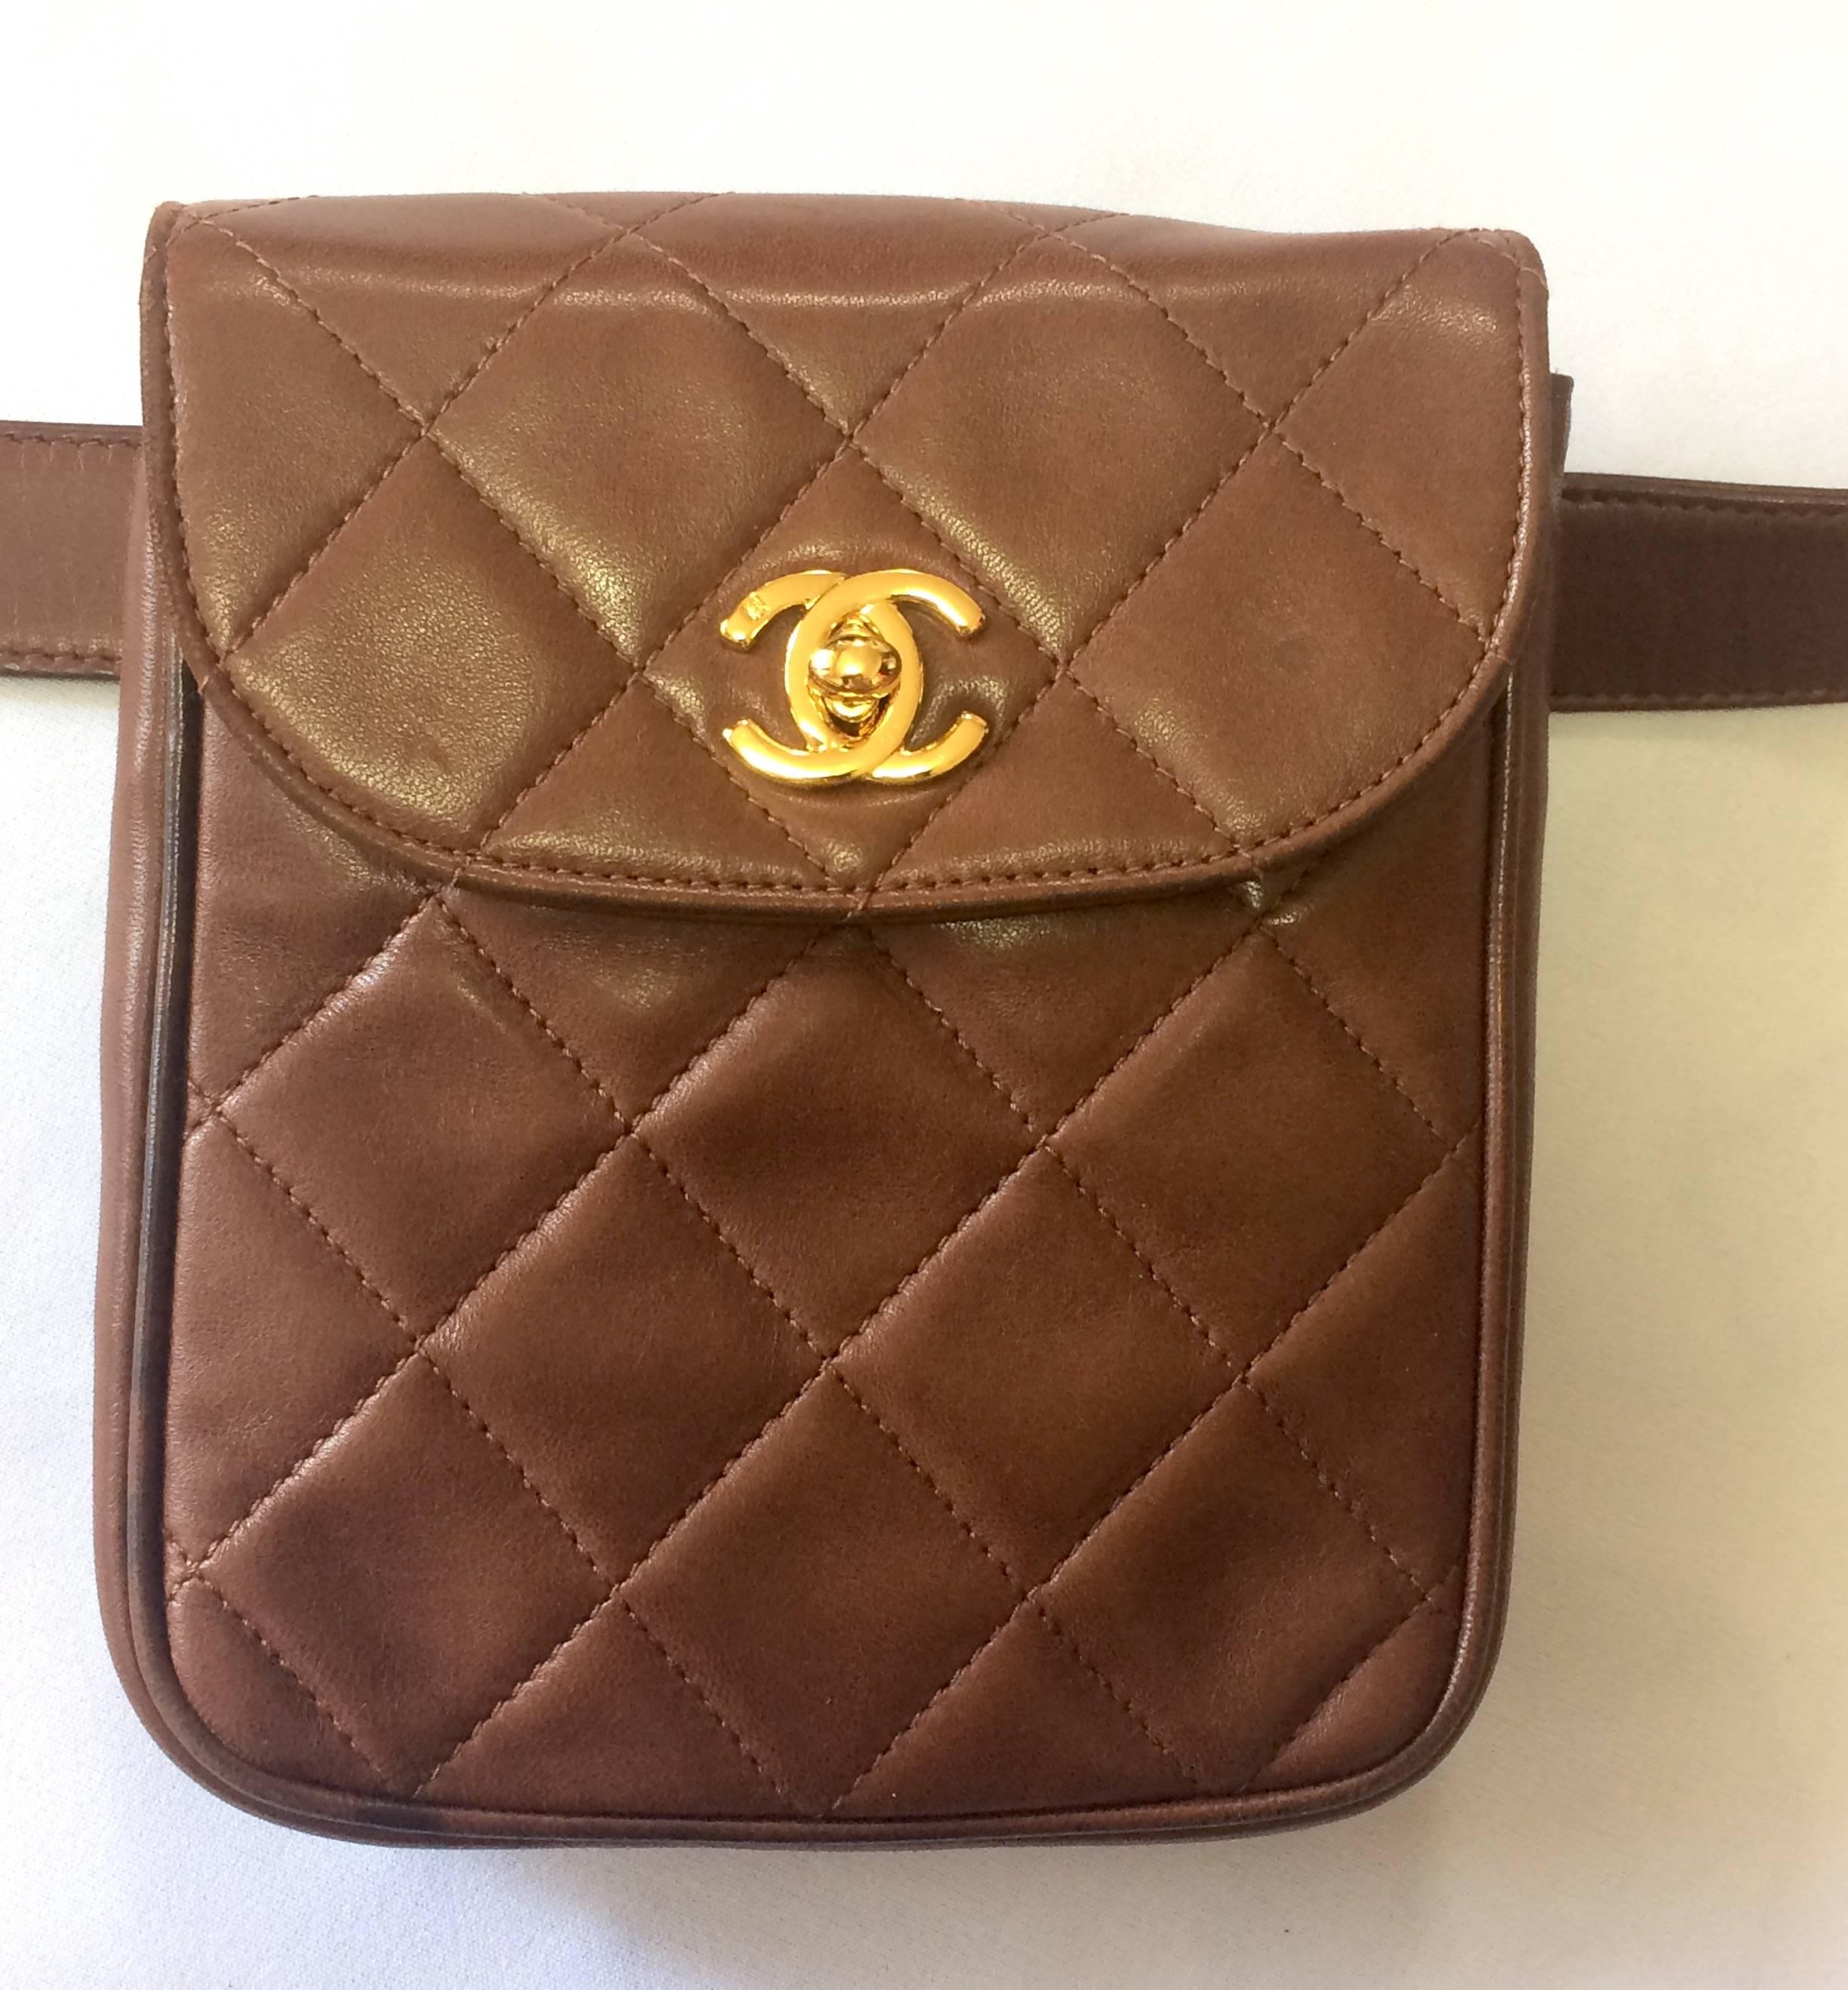 1990s. Vintage CHANEL brown leather vertical square shape belt bag, 2.55 fanny pack with golden CC closure and belt. 28.5